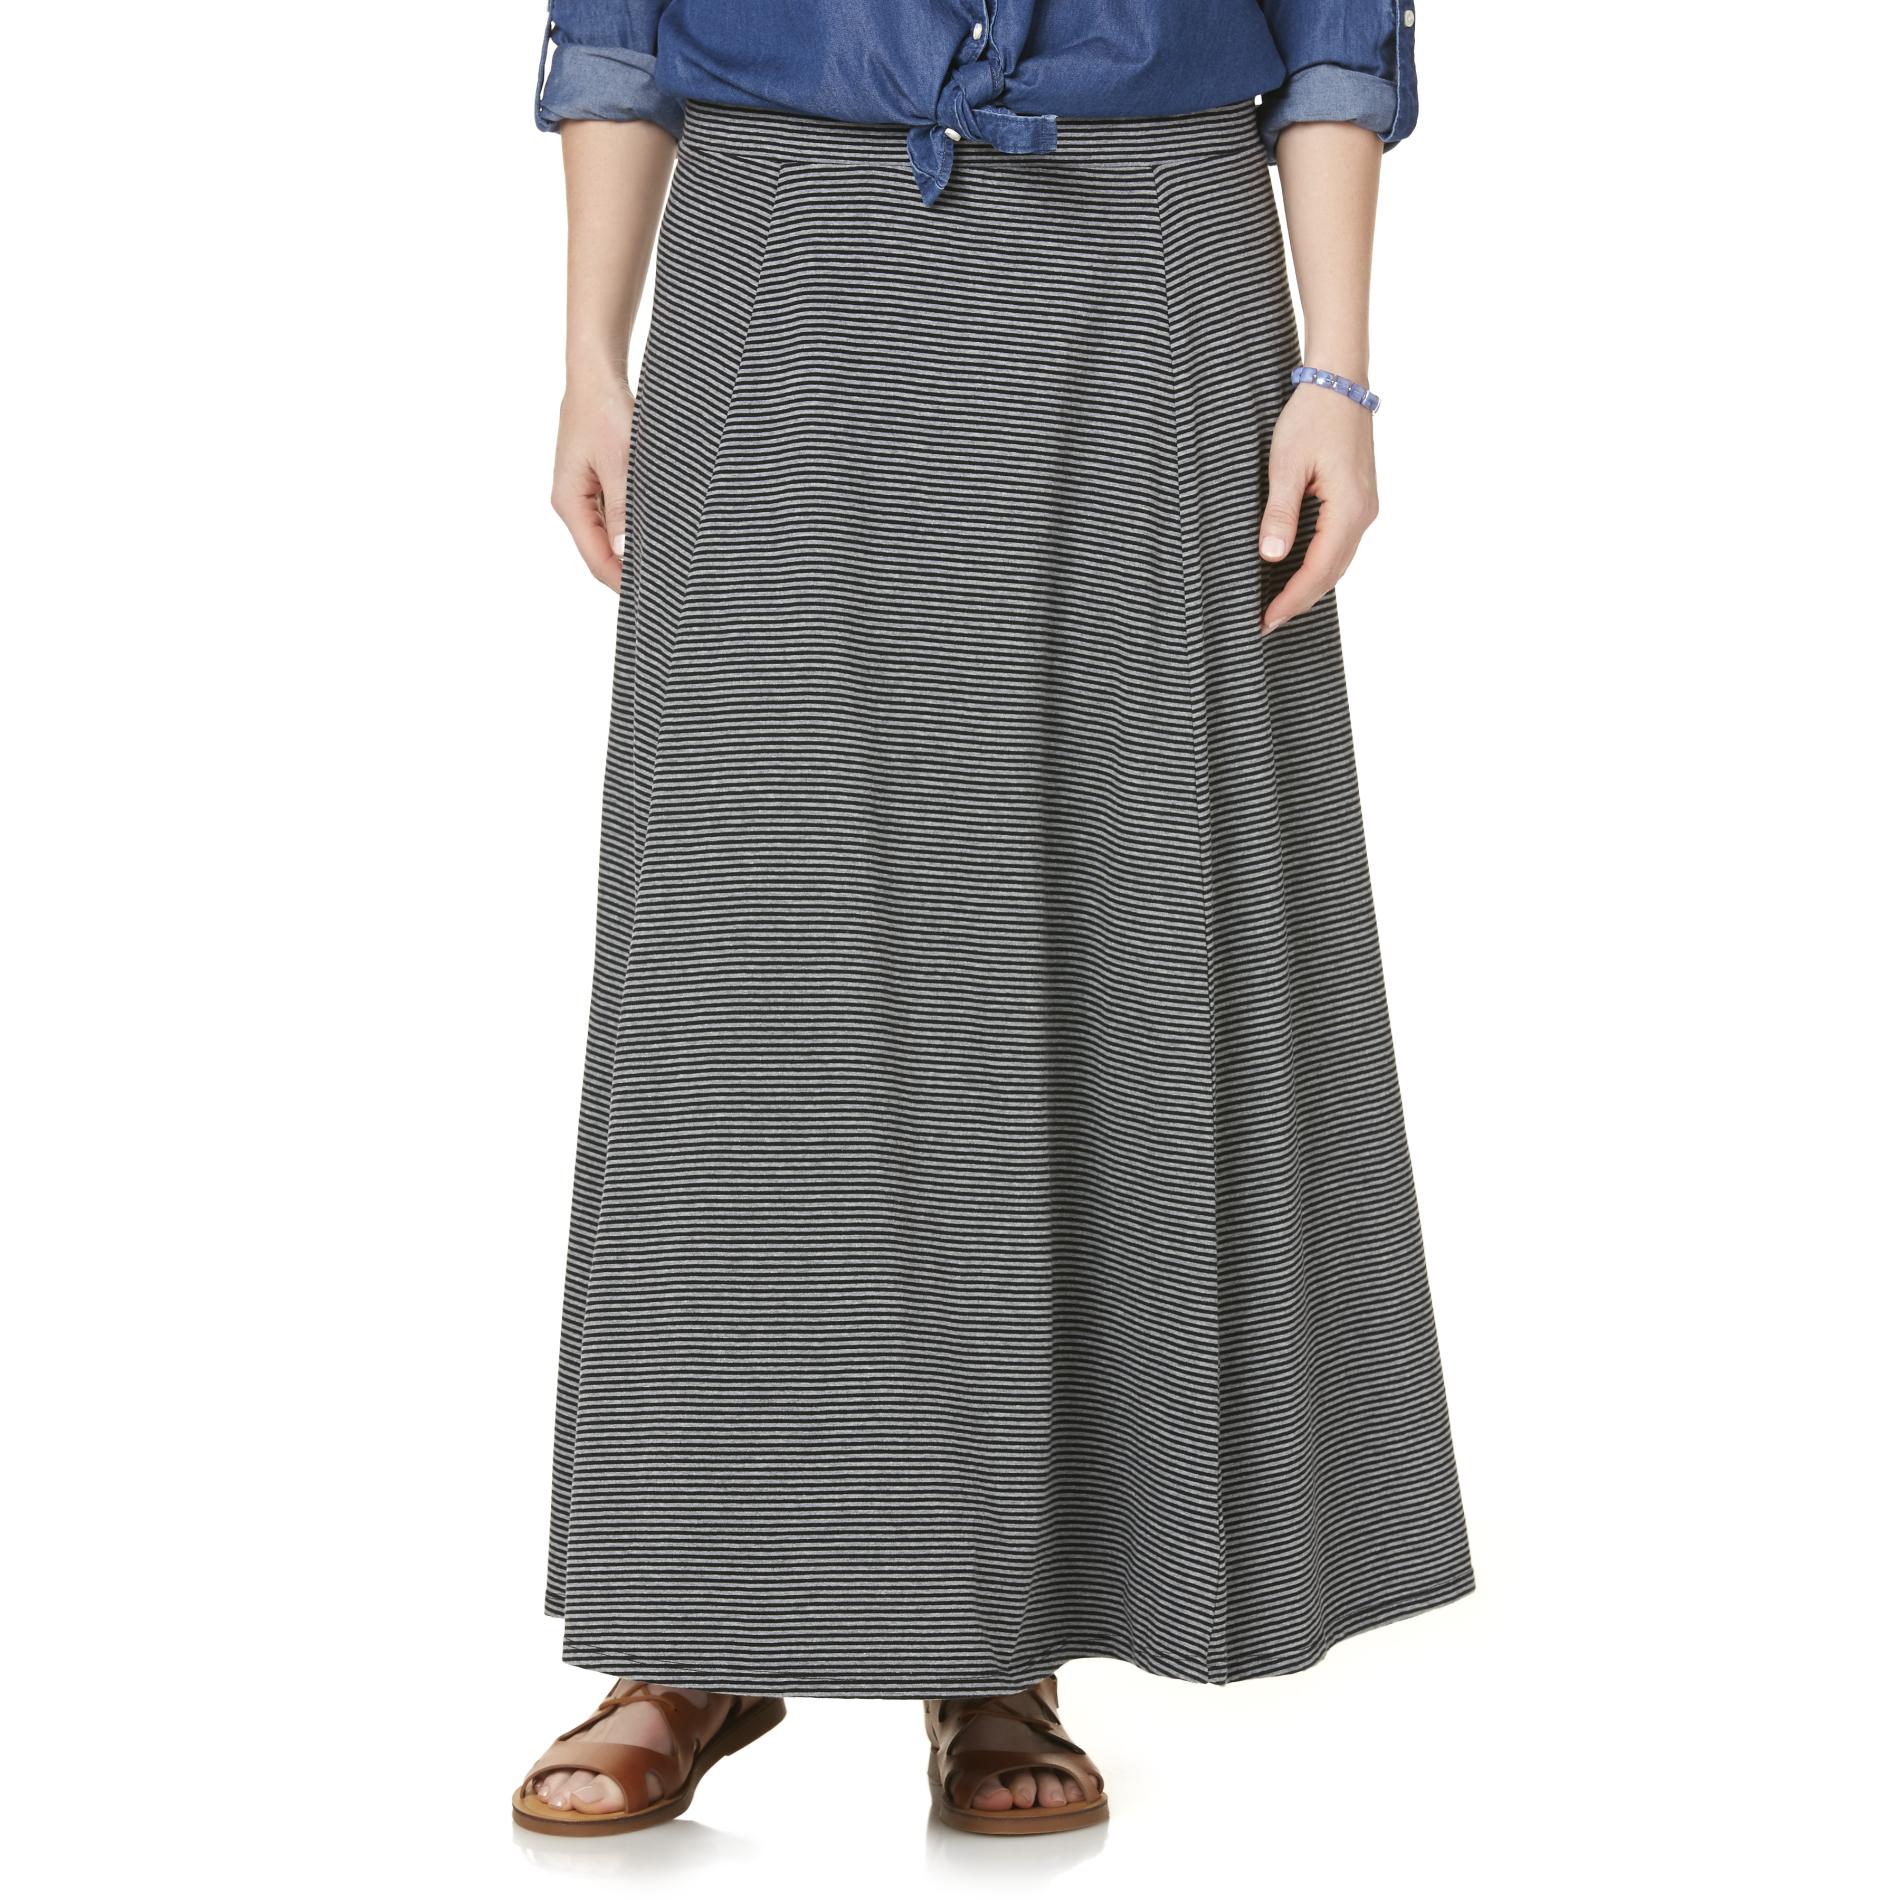 Simply Emma Women's Plus Maxi Skirt - Striped